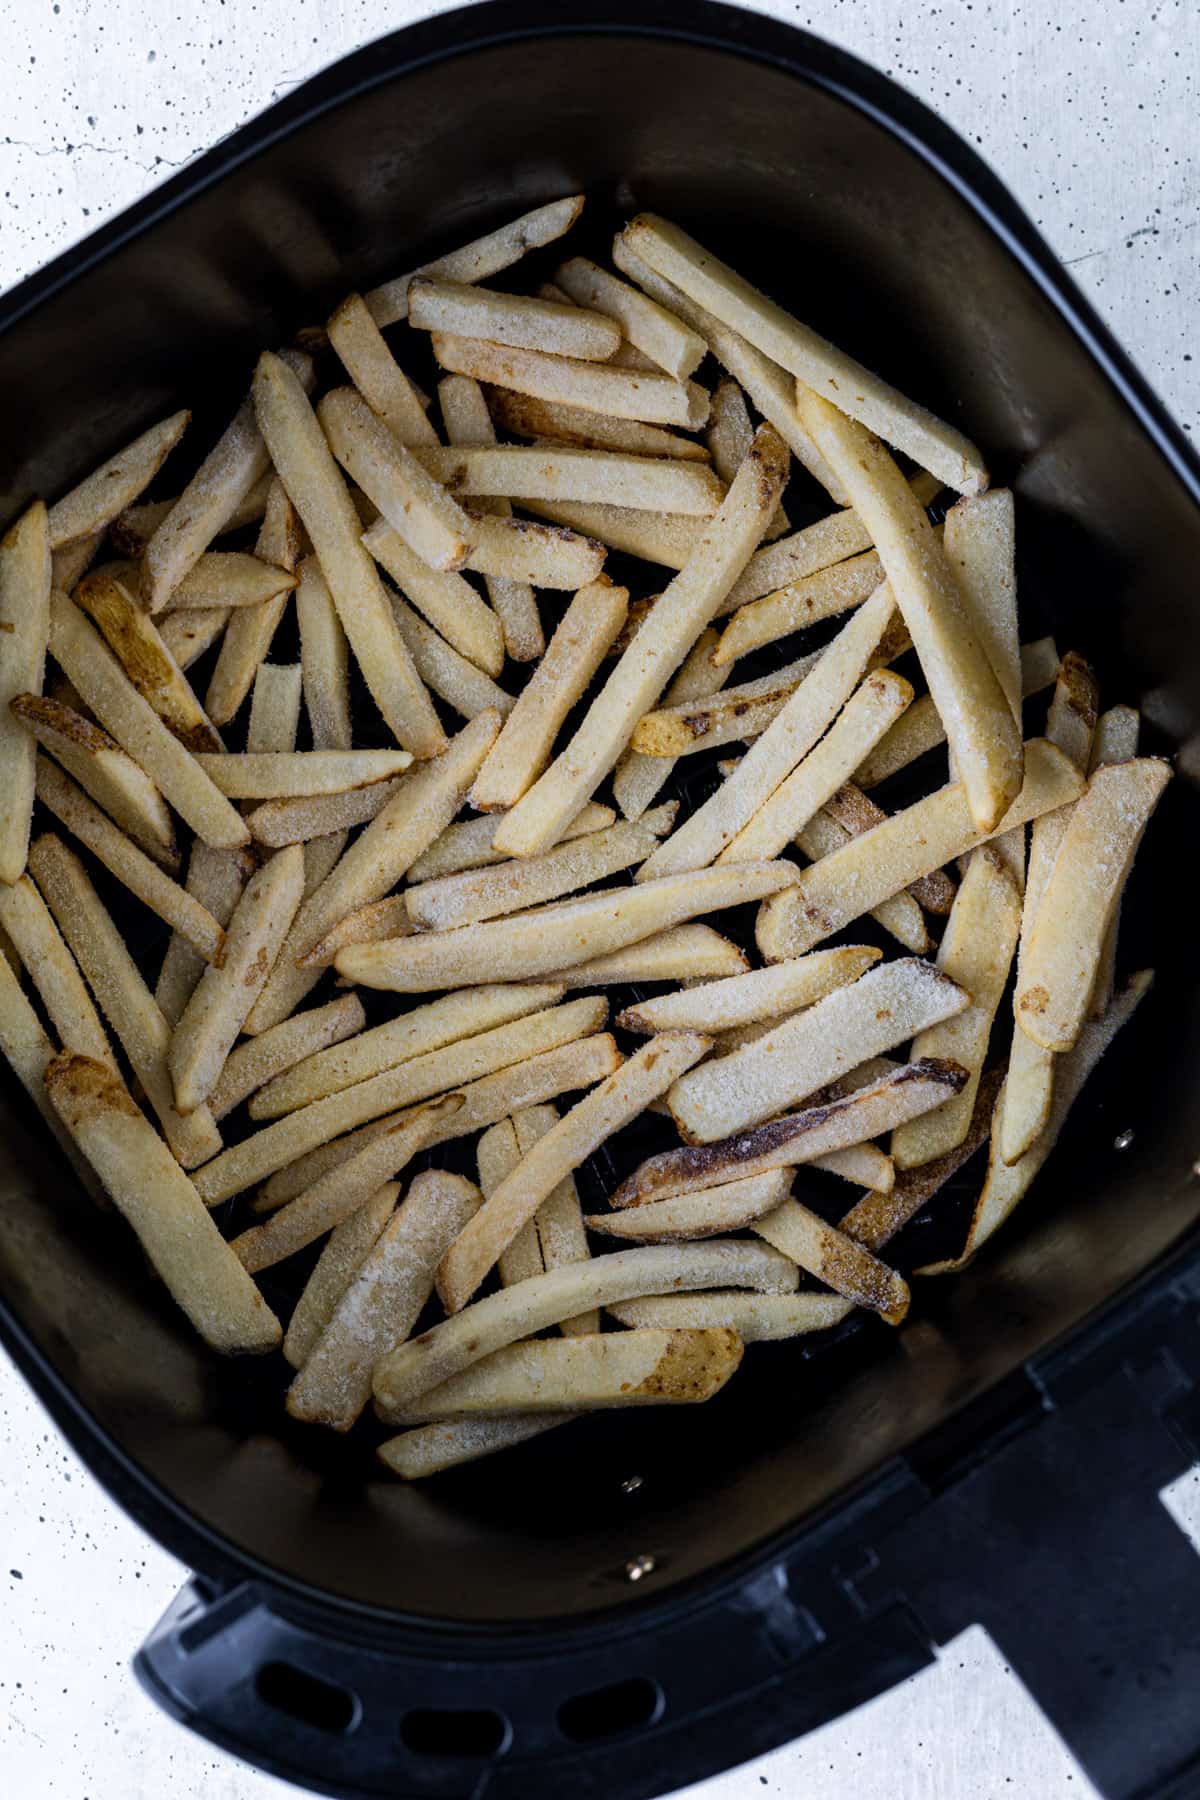 Frozen fries in the basket of an air fryer.